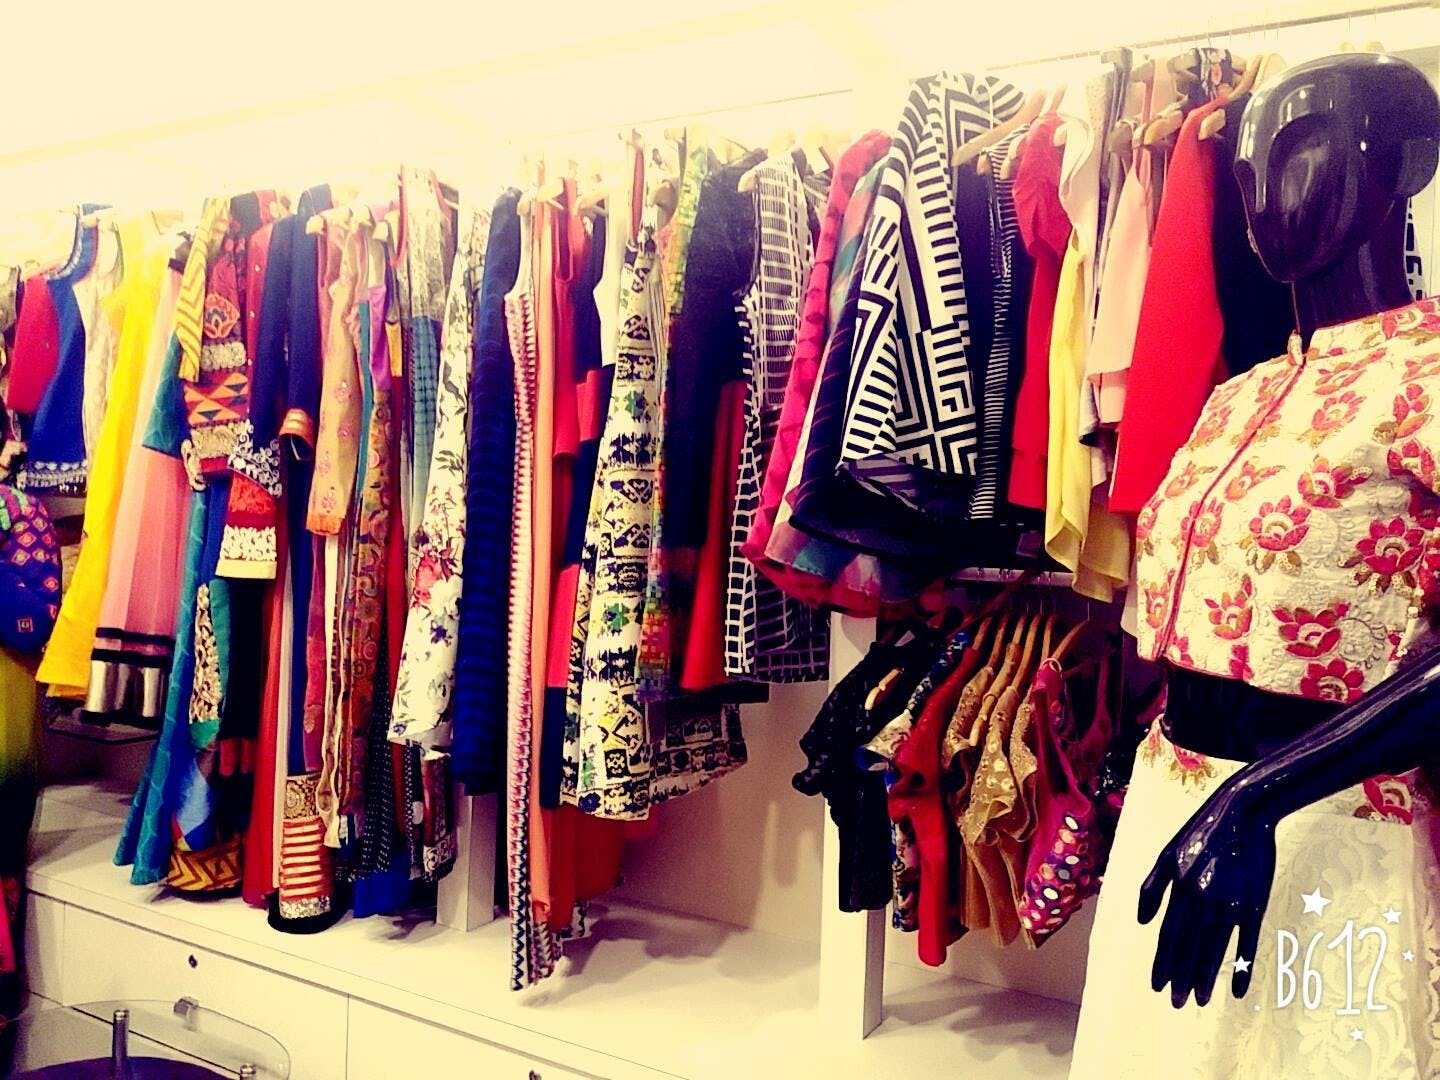 Boutique,Clothing,Closet,Room,Fashion,Fashion design,Wardrobe,Textile,Clothes hanger,Dress